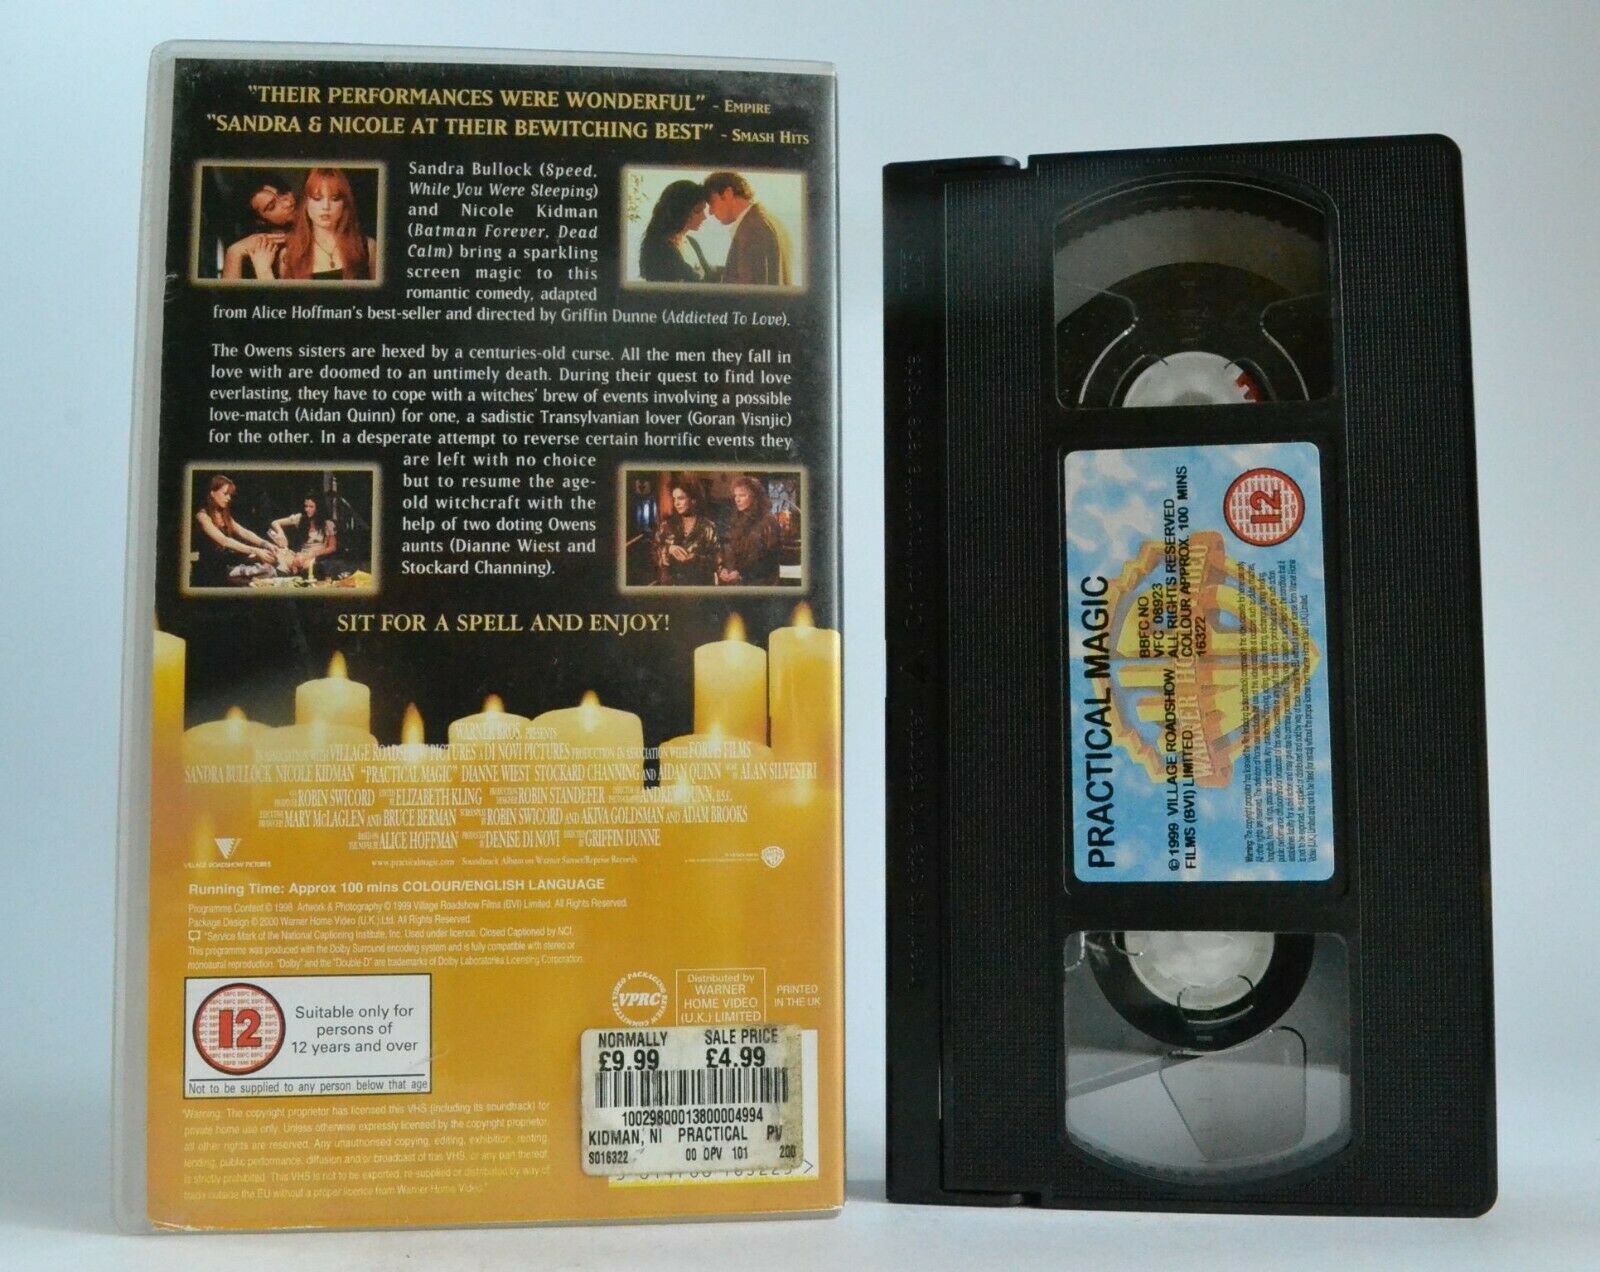 Practical Magic (1998): Witchcraft Fantasy - Sandra Bullock/Nicole Kidman - VHS-